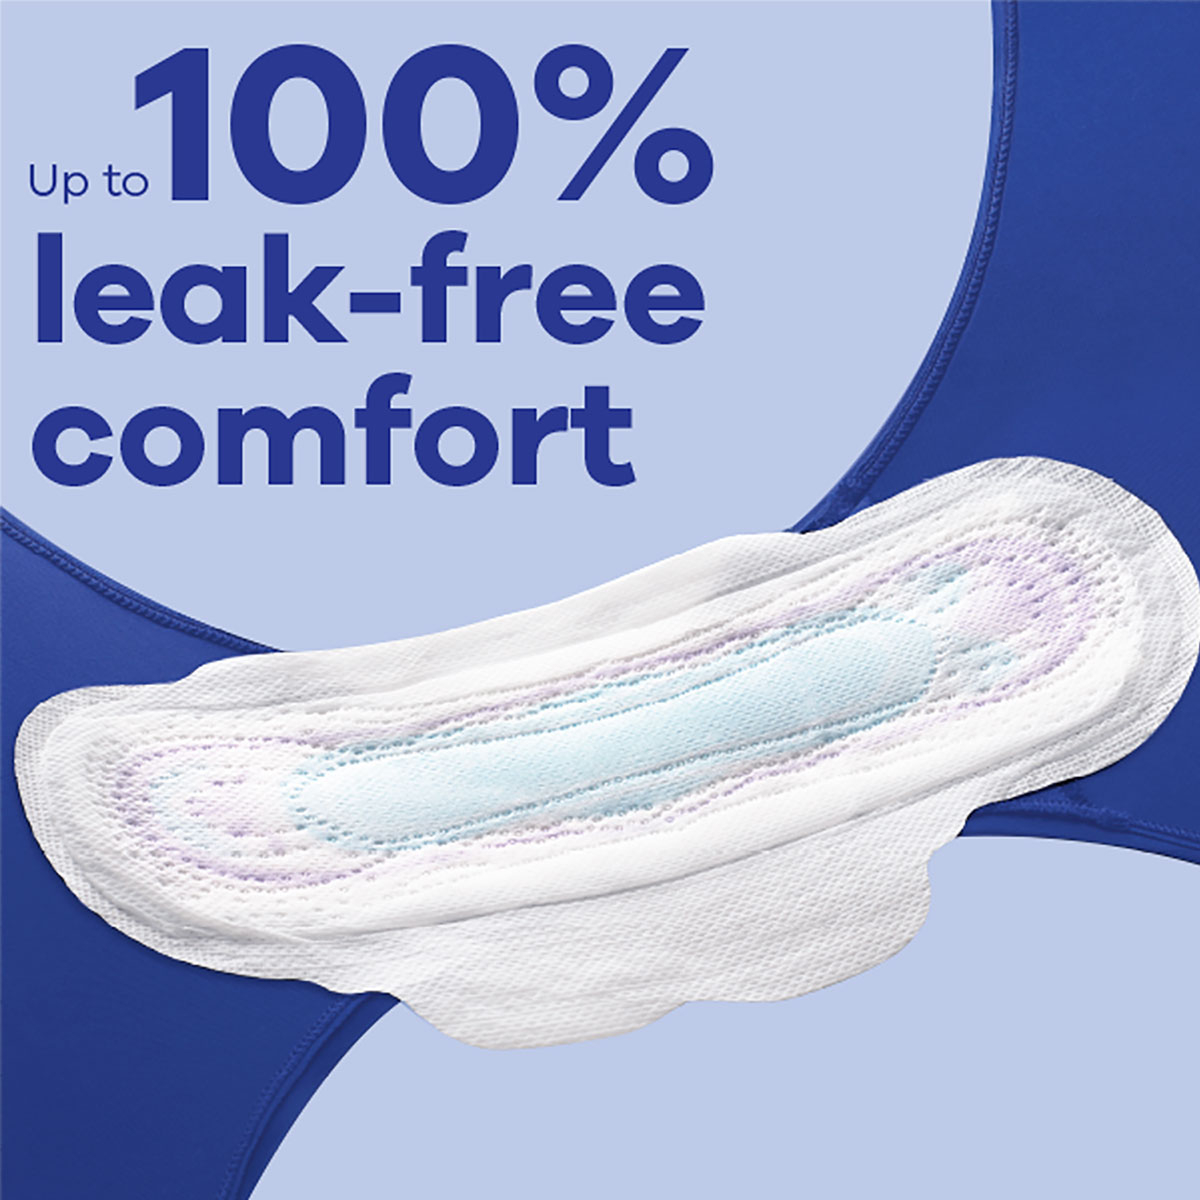 100% Leak-free comfort